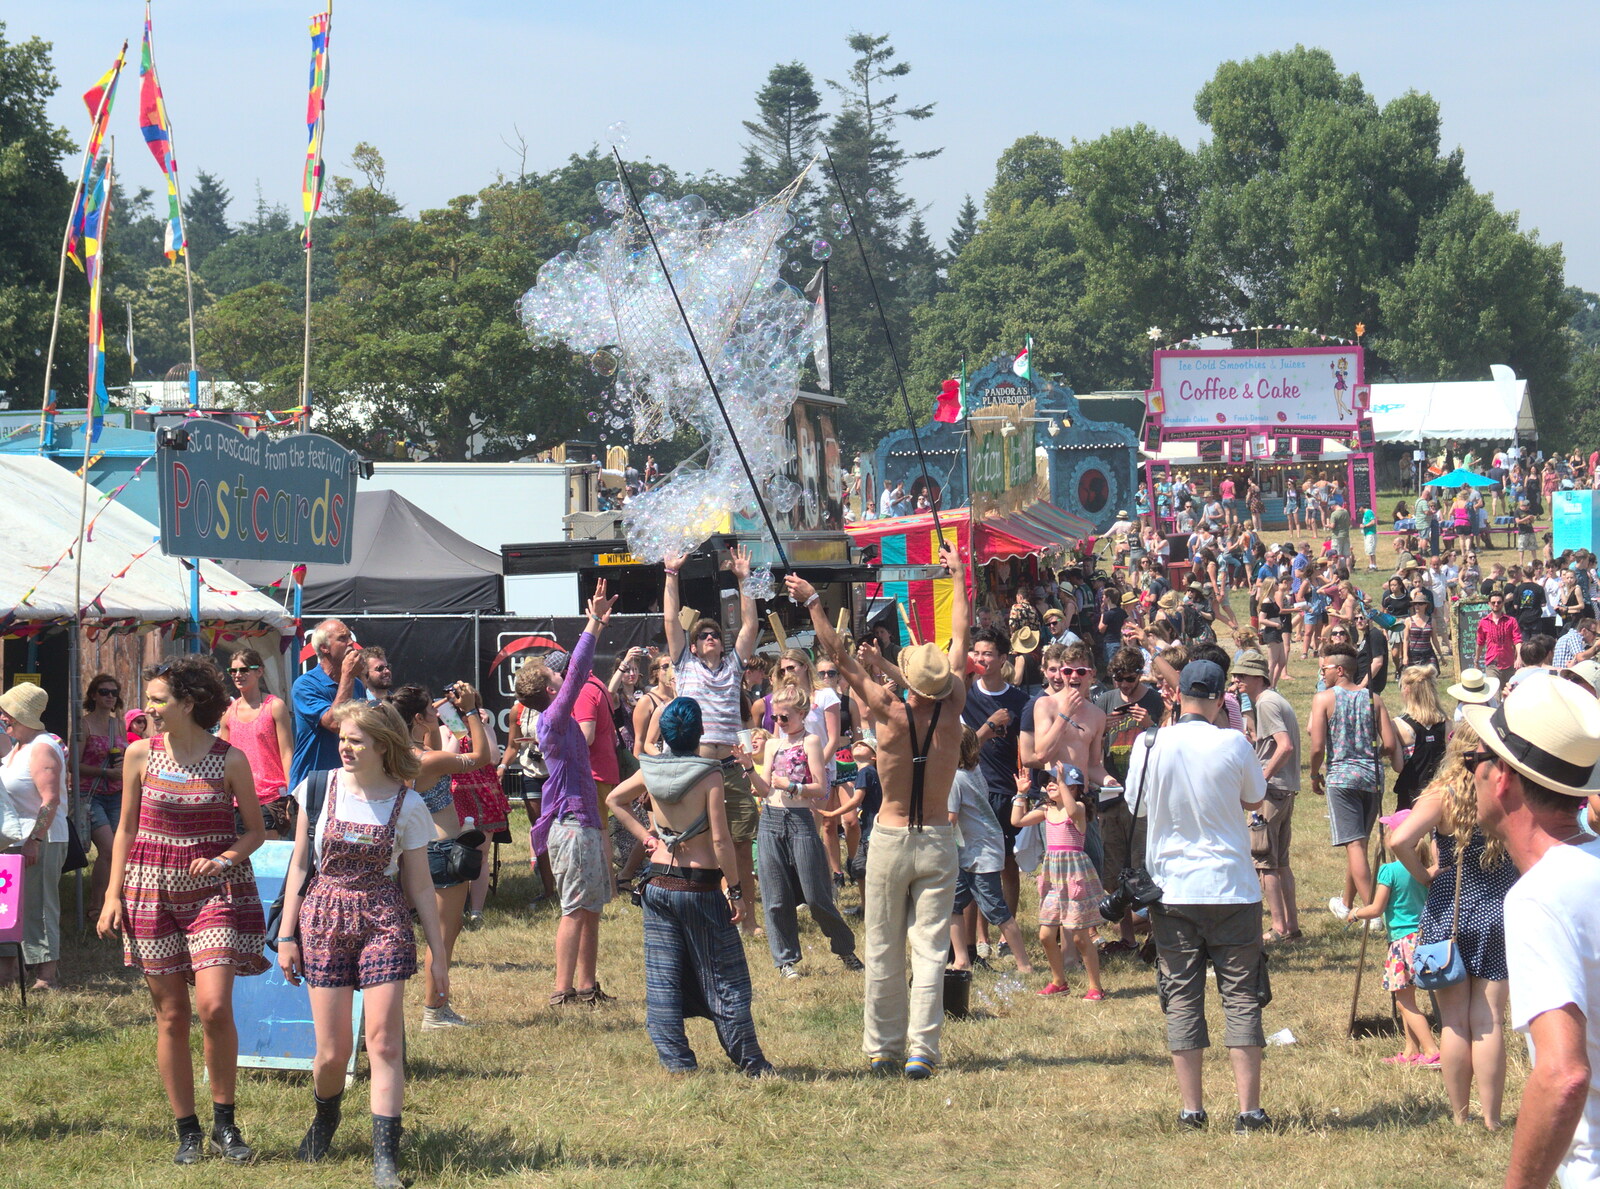 Festival bubbles from Latitude Festival, Henham Park, Southwold, Suffolk - 17th July 2014